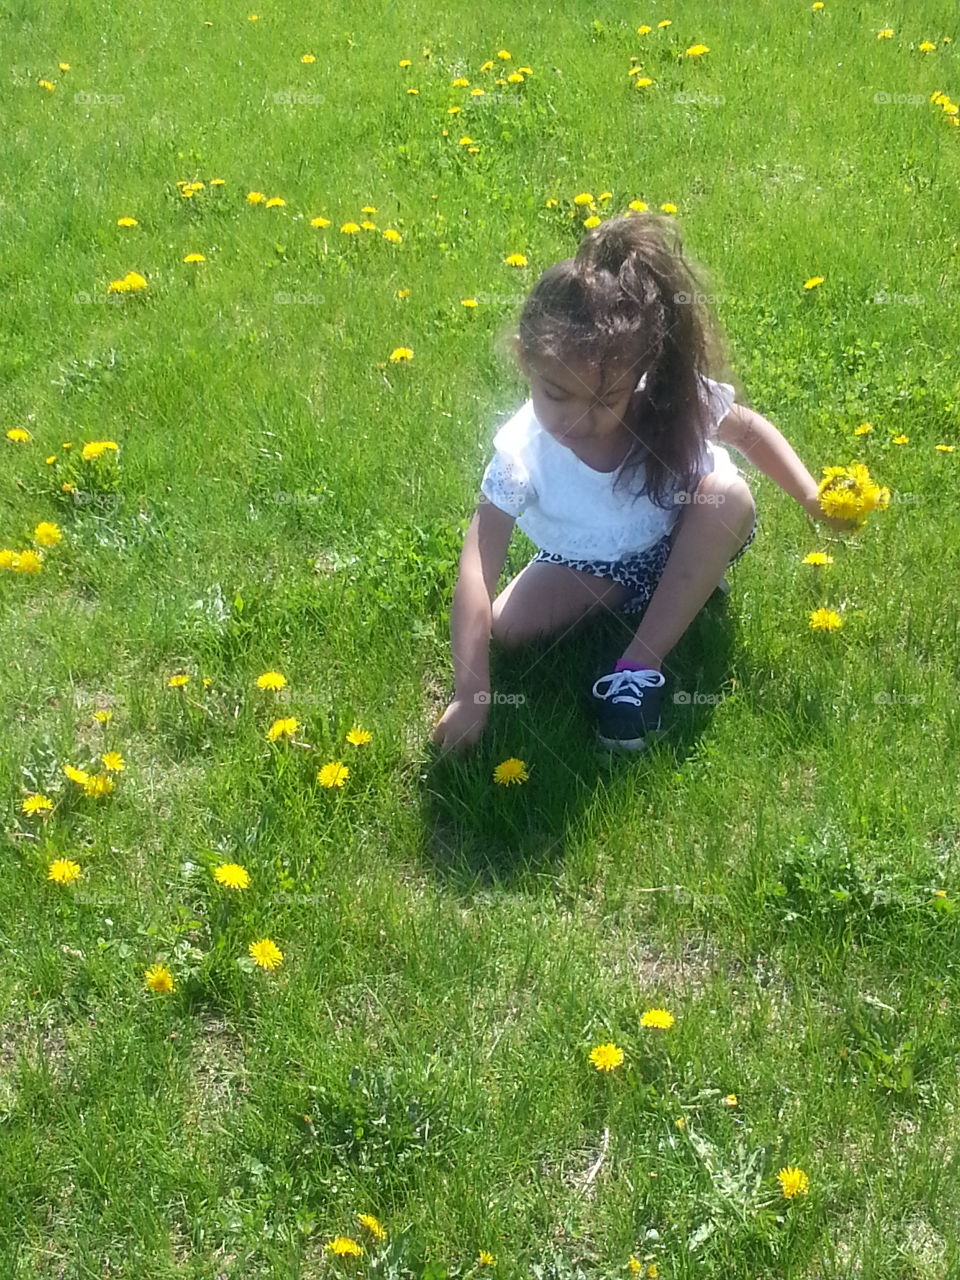 Picking Flowers. picking flowers